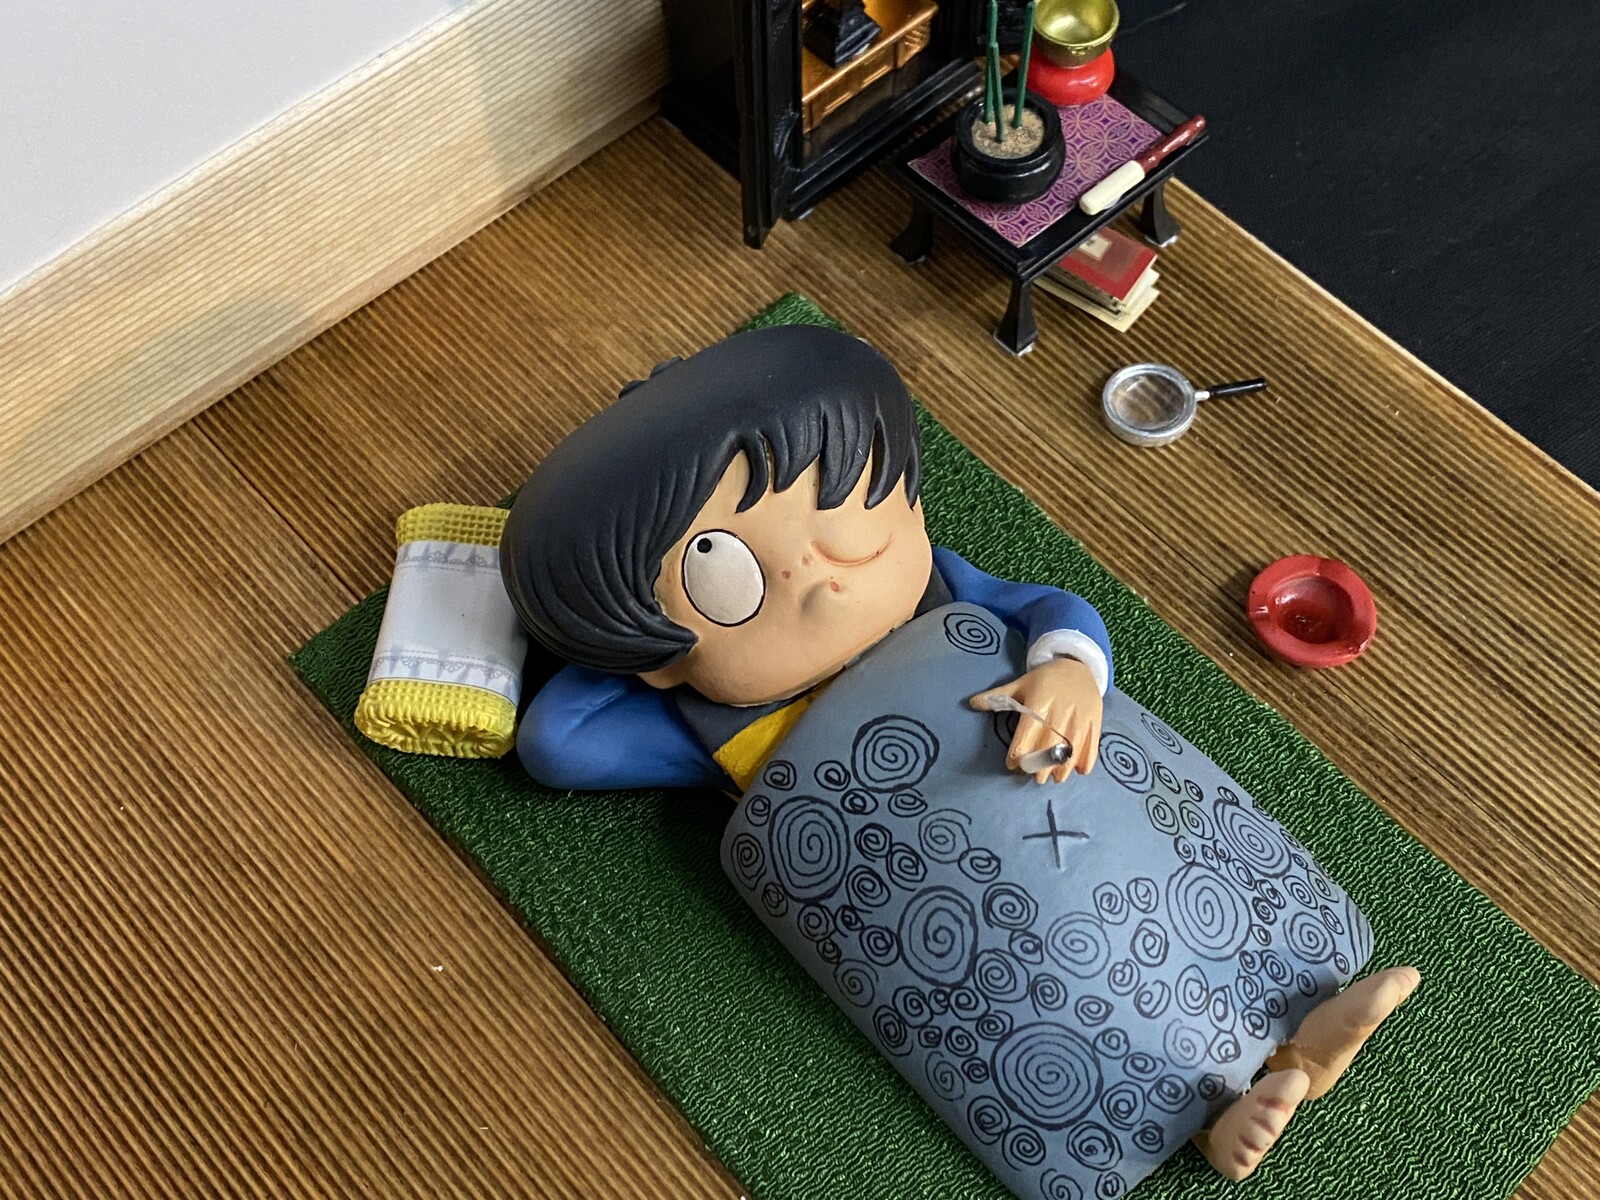 Fu-rai-sou's  Kitaro diorama art statue 
風来荘の鬼太郎 完成品
Portfolio &amp; Store: https://www.solidart.club